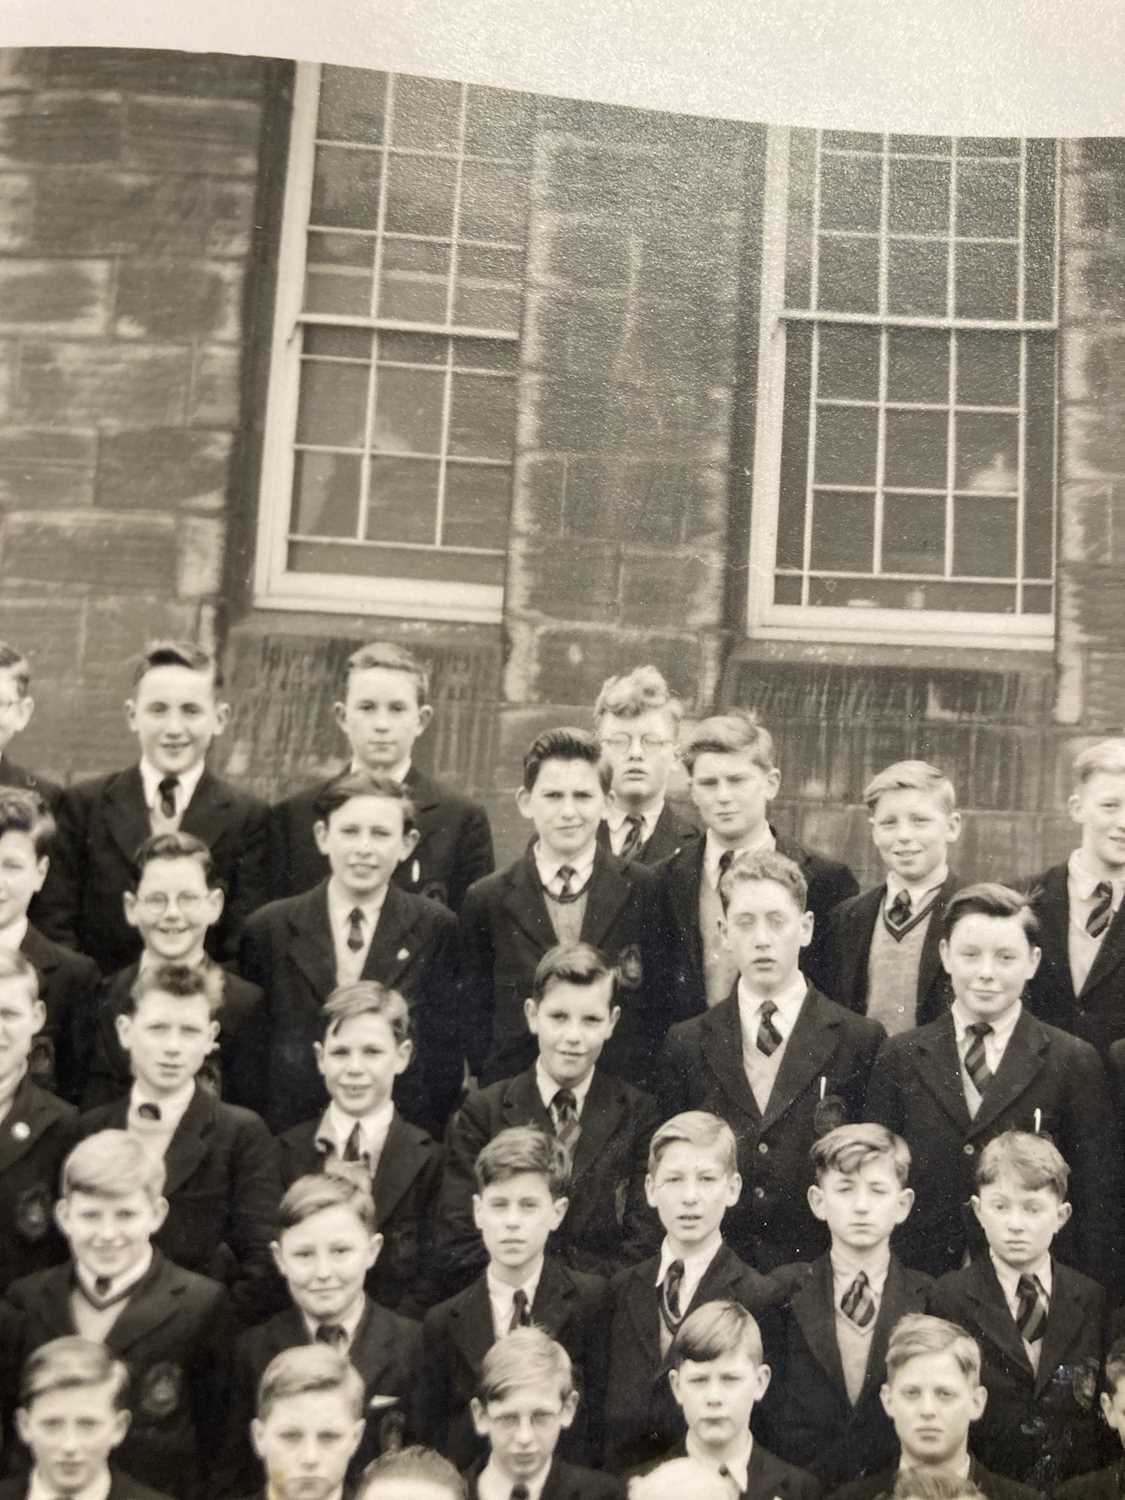 THE BEATLES - ORIGINAL LIVERPOOL INSTITUTE SCHOOL PHOTOGRAPH 1956 - PAUL MCCARTNEY / GEORGE HARRISON - Image 16 of 18